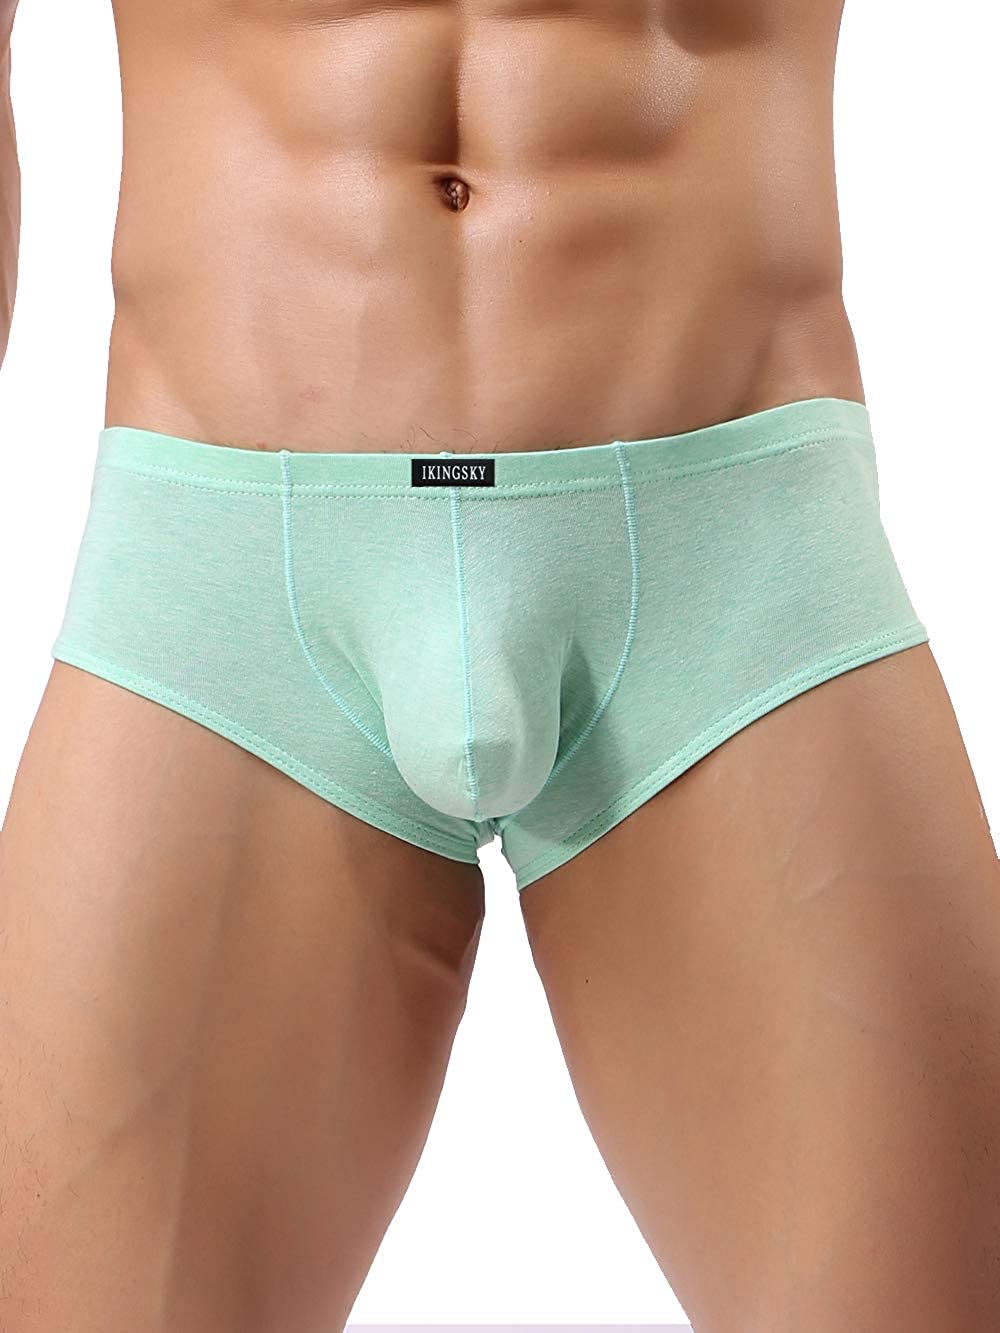 Ikingsky Mens Cotton Boxer Briefs Underwear Sexy Low Rise Men Pouch Boxer Short Ebay